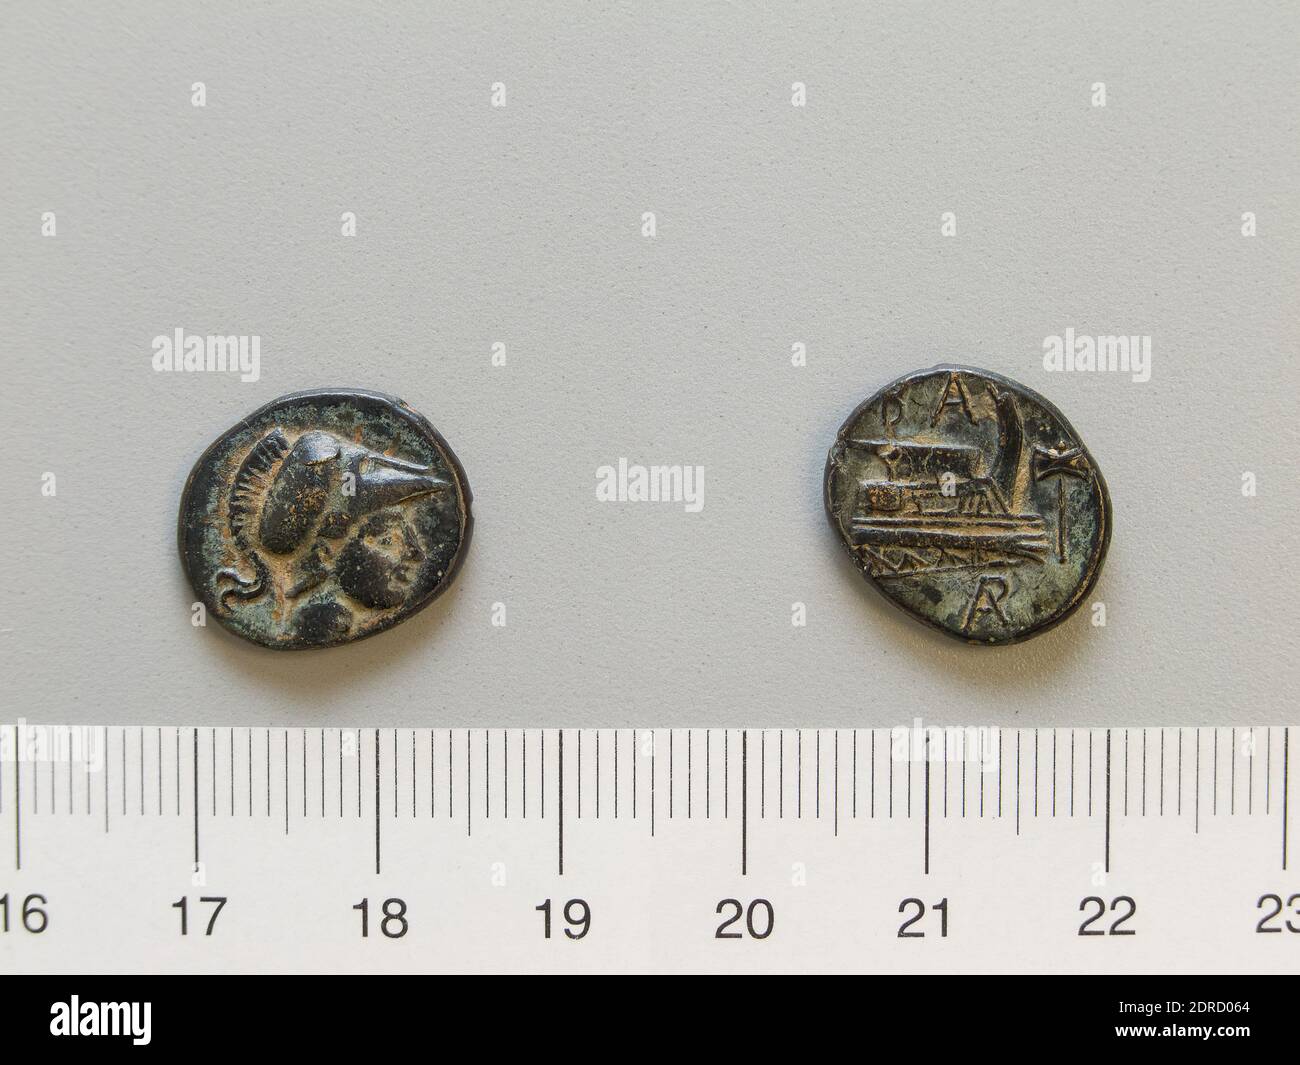 Ruler: Demetrius Poliorcetes, King of Macedon 306-283 B.C.Mint: Caria, Coin of Demetrius Poliorcetes, King of Macedon from Caria, 301–295 B.C., Copper, 2.98 g, 12:00, 16.5 mm, Made in Caria, Greek, 4th–3rd century B.C., Numismatics Stock Photo